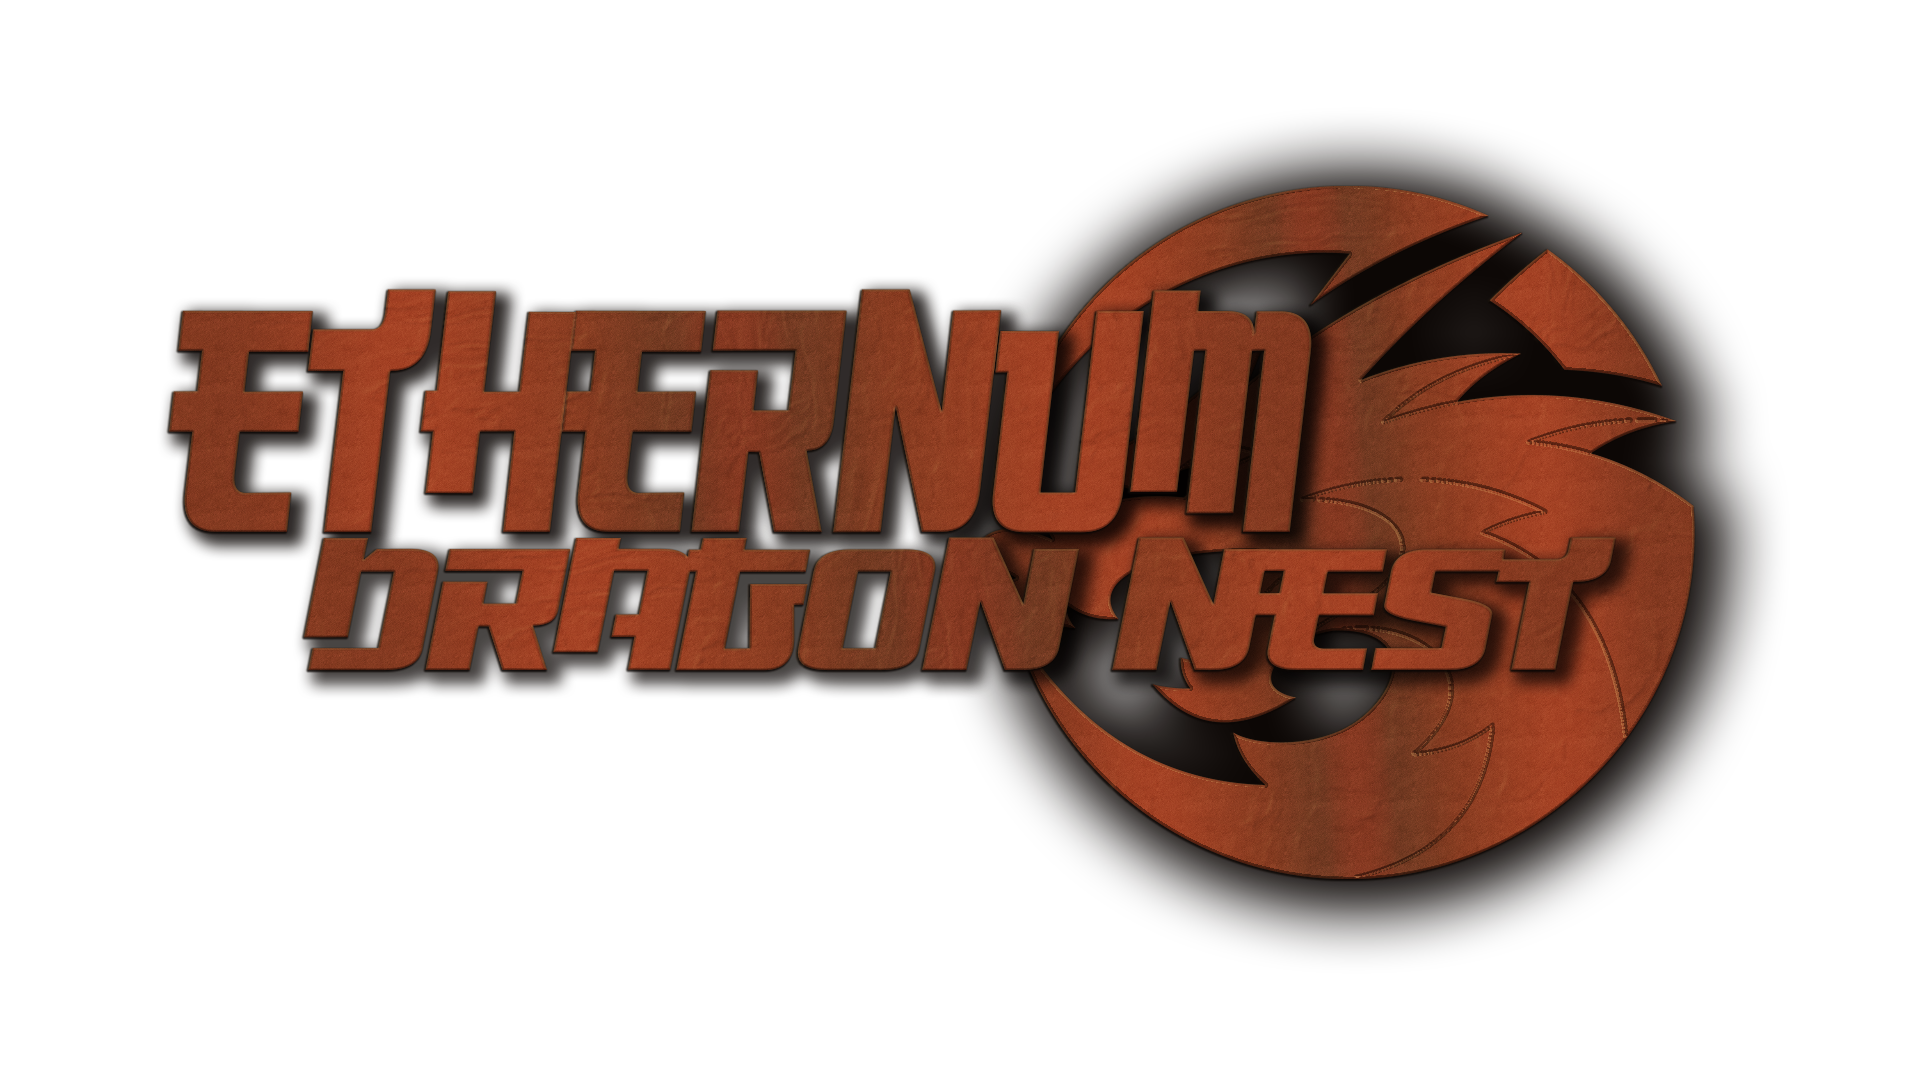 Ethernum Dragon Nest